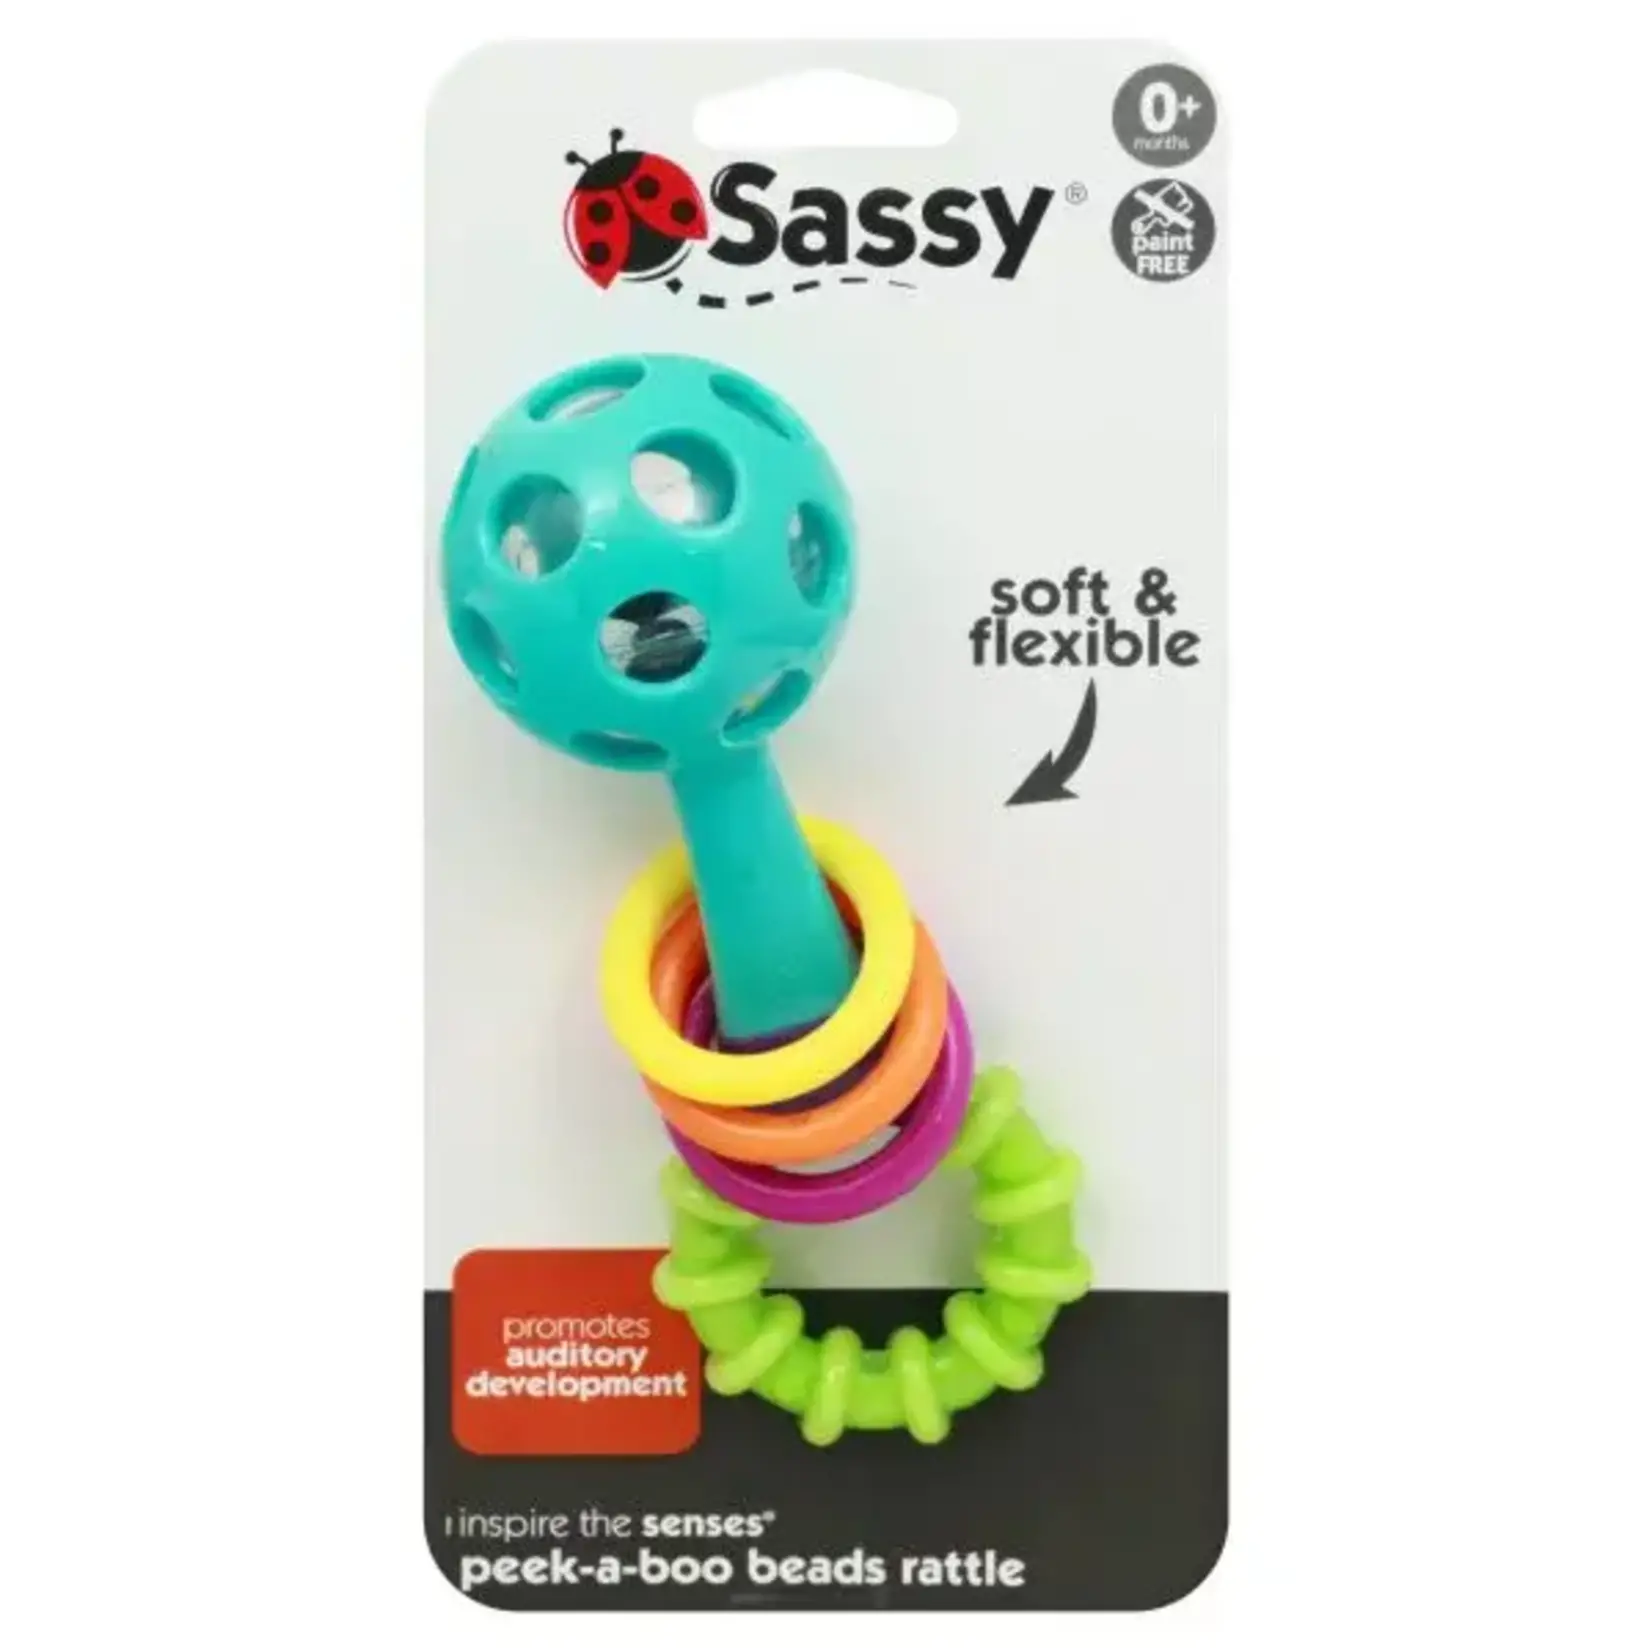 Sassy Peak a boo beads rattle